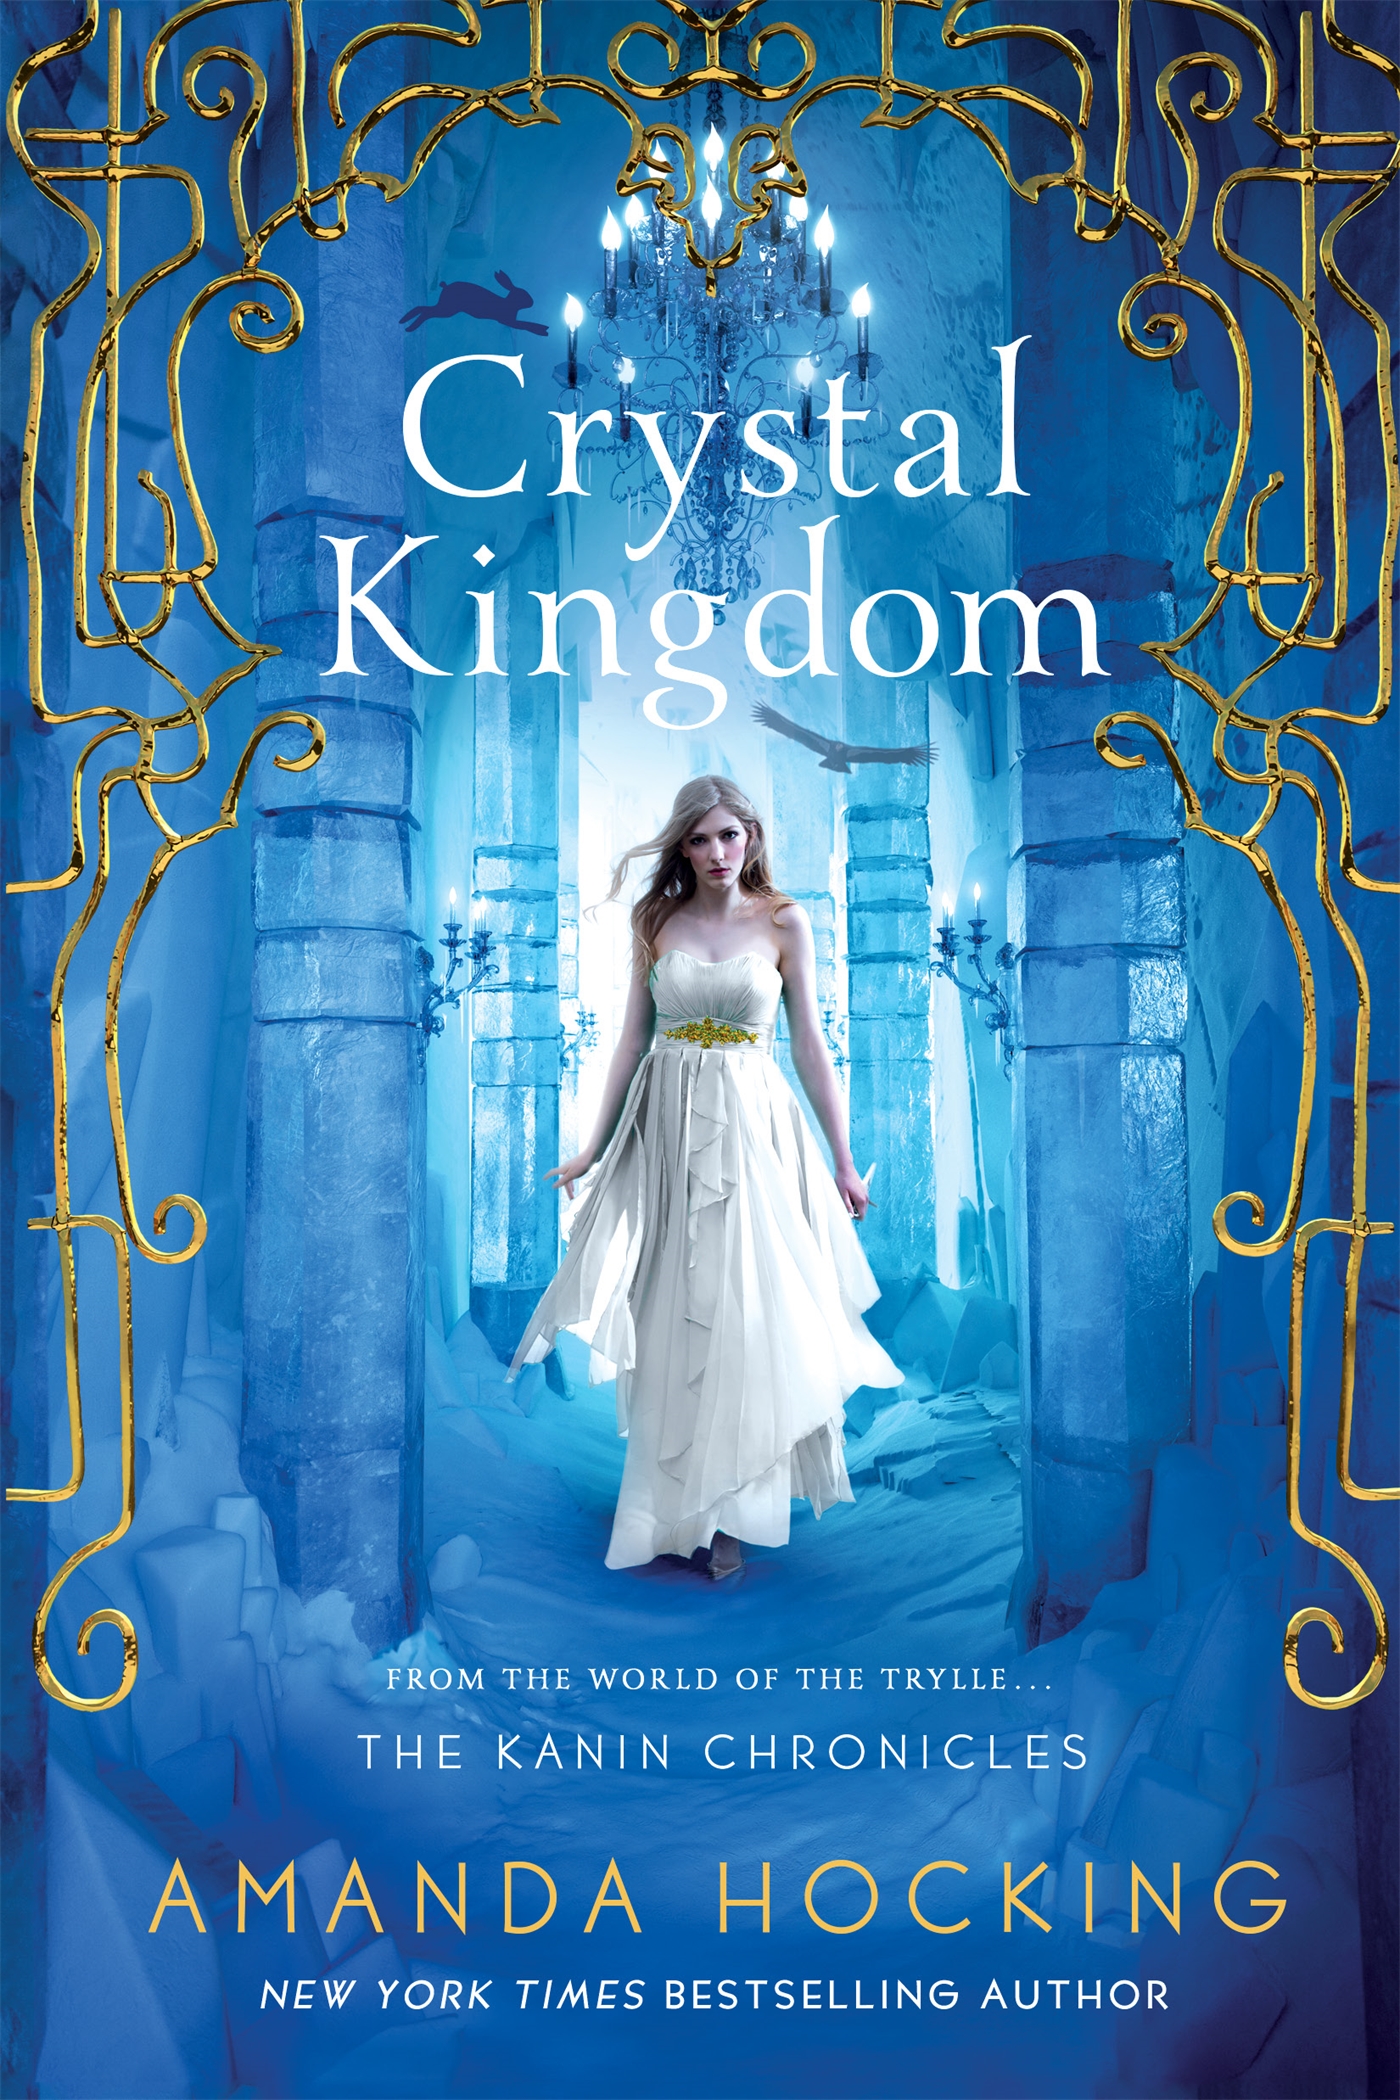 Crystal kingdom cover image